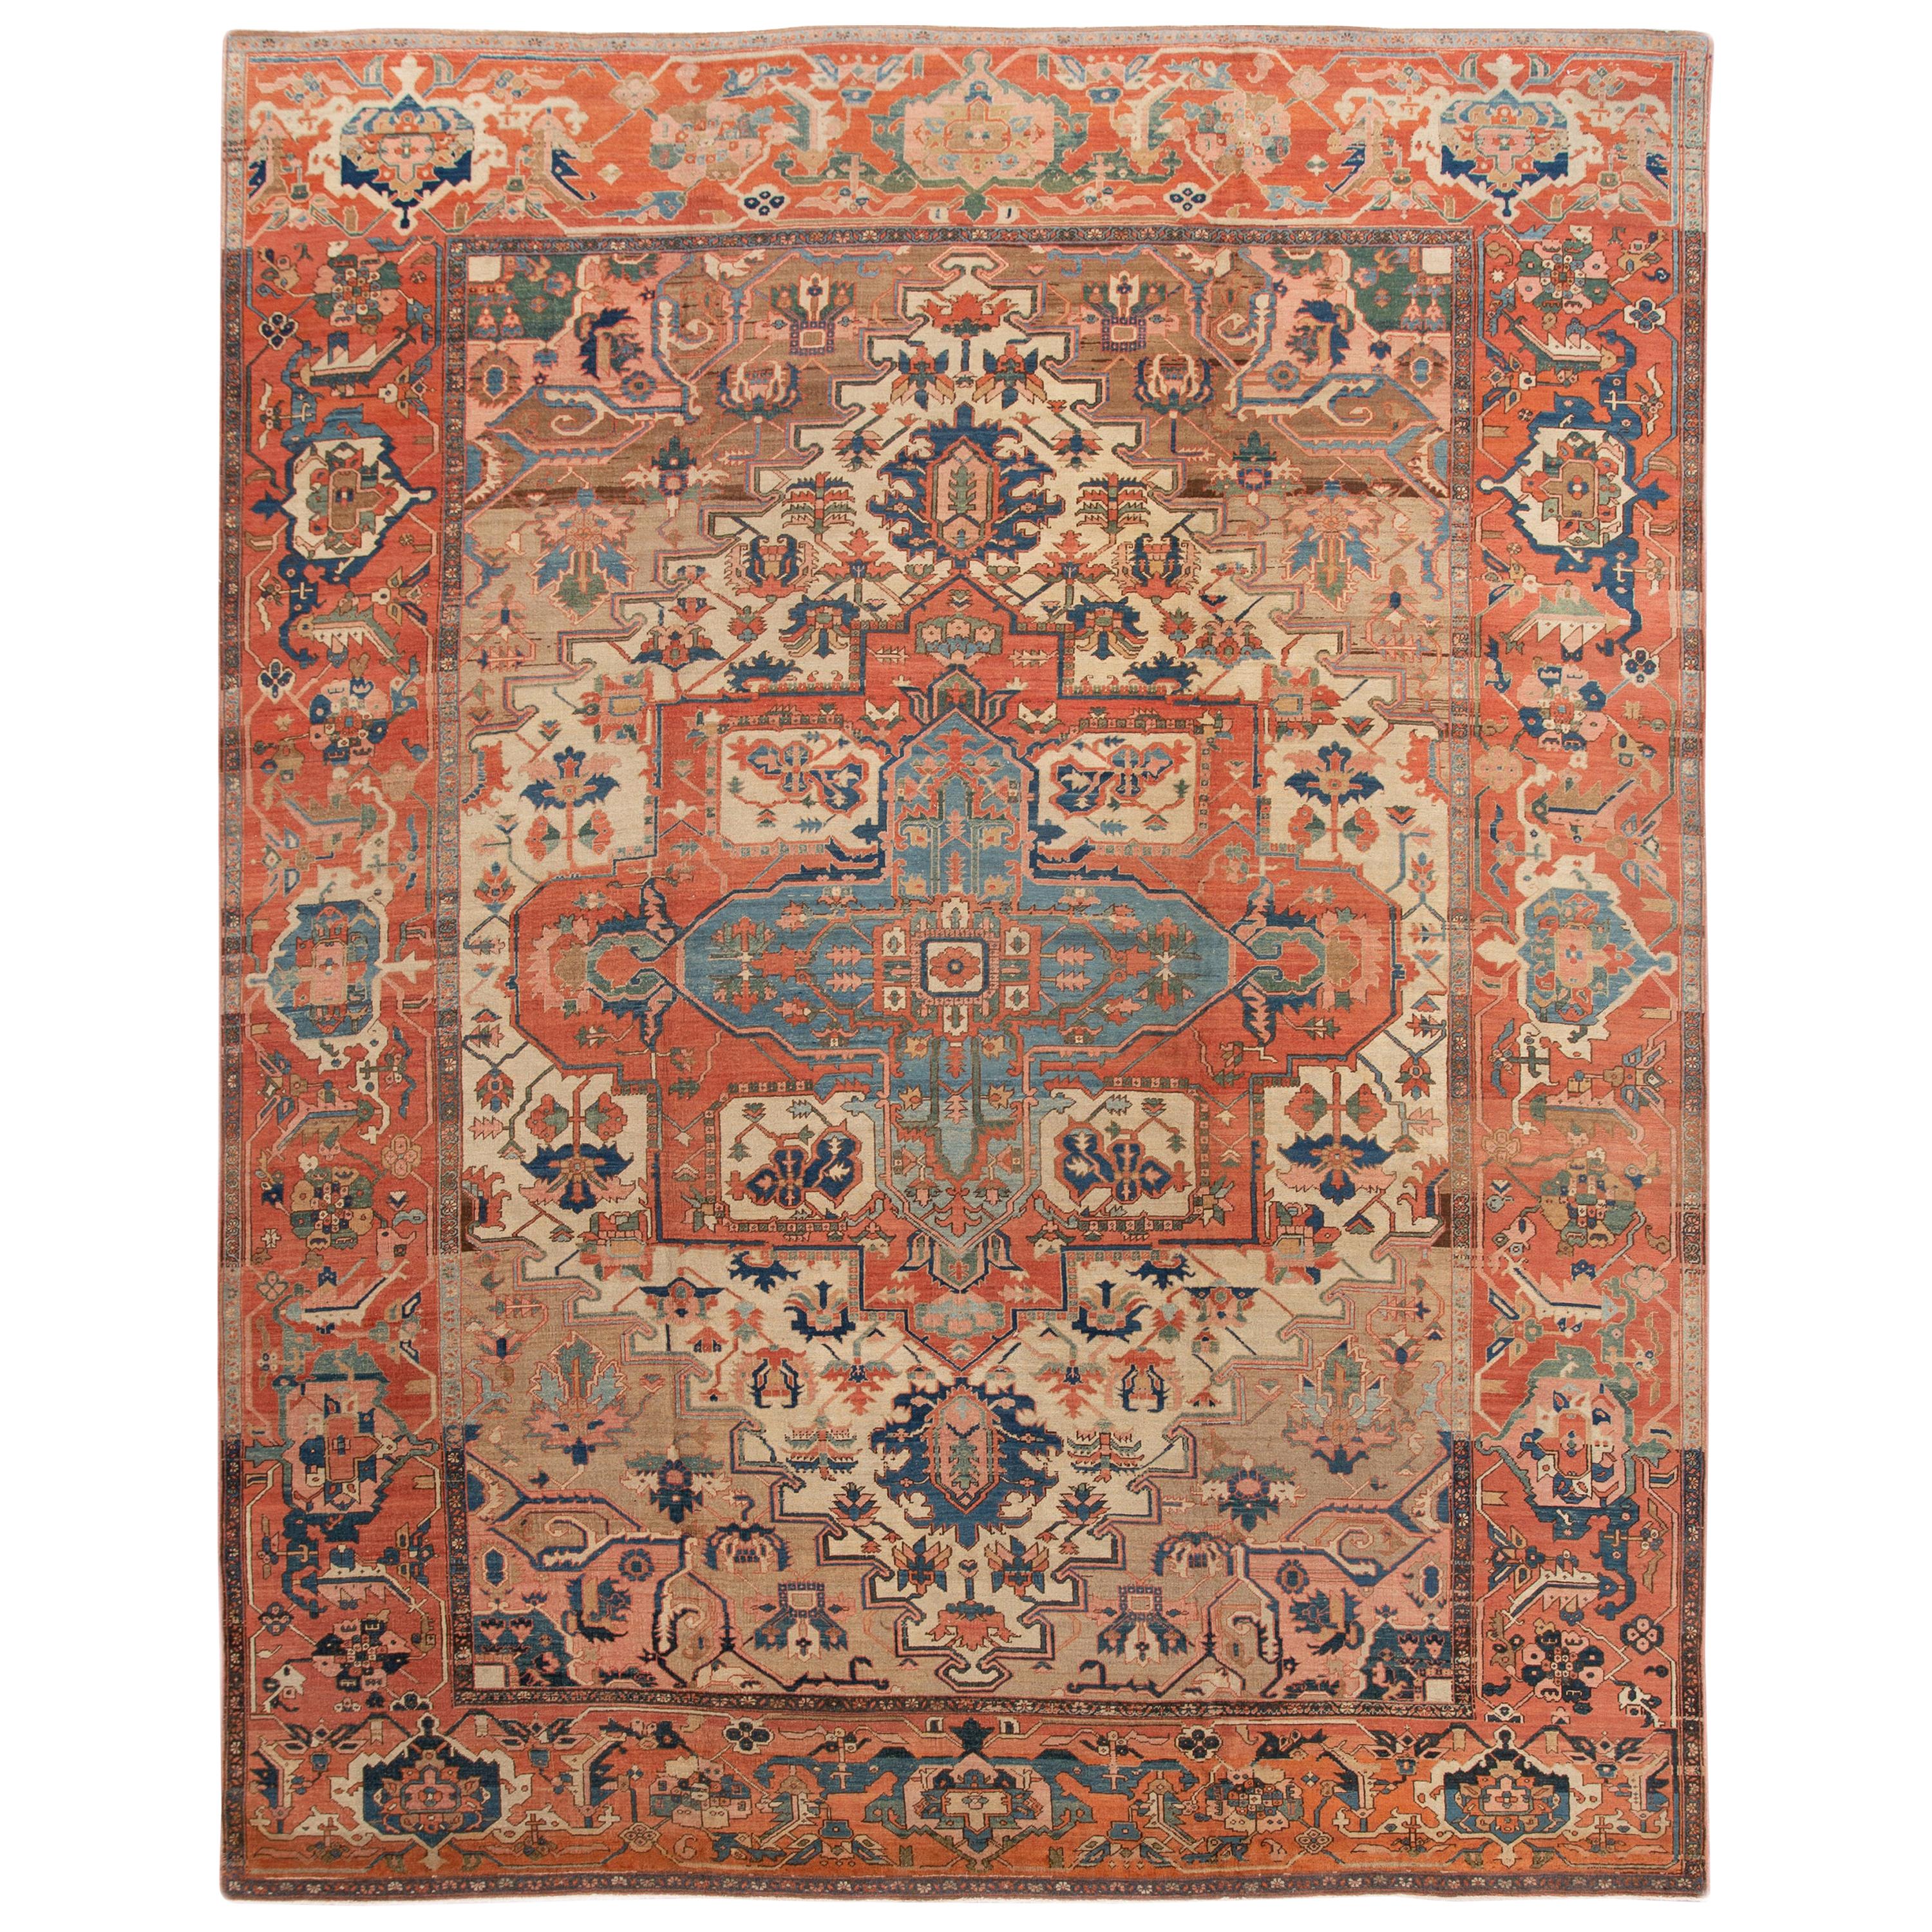 19th Century Antique Serapi Handmade Wool Rug In Orange-Rust Color For Sale